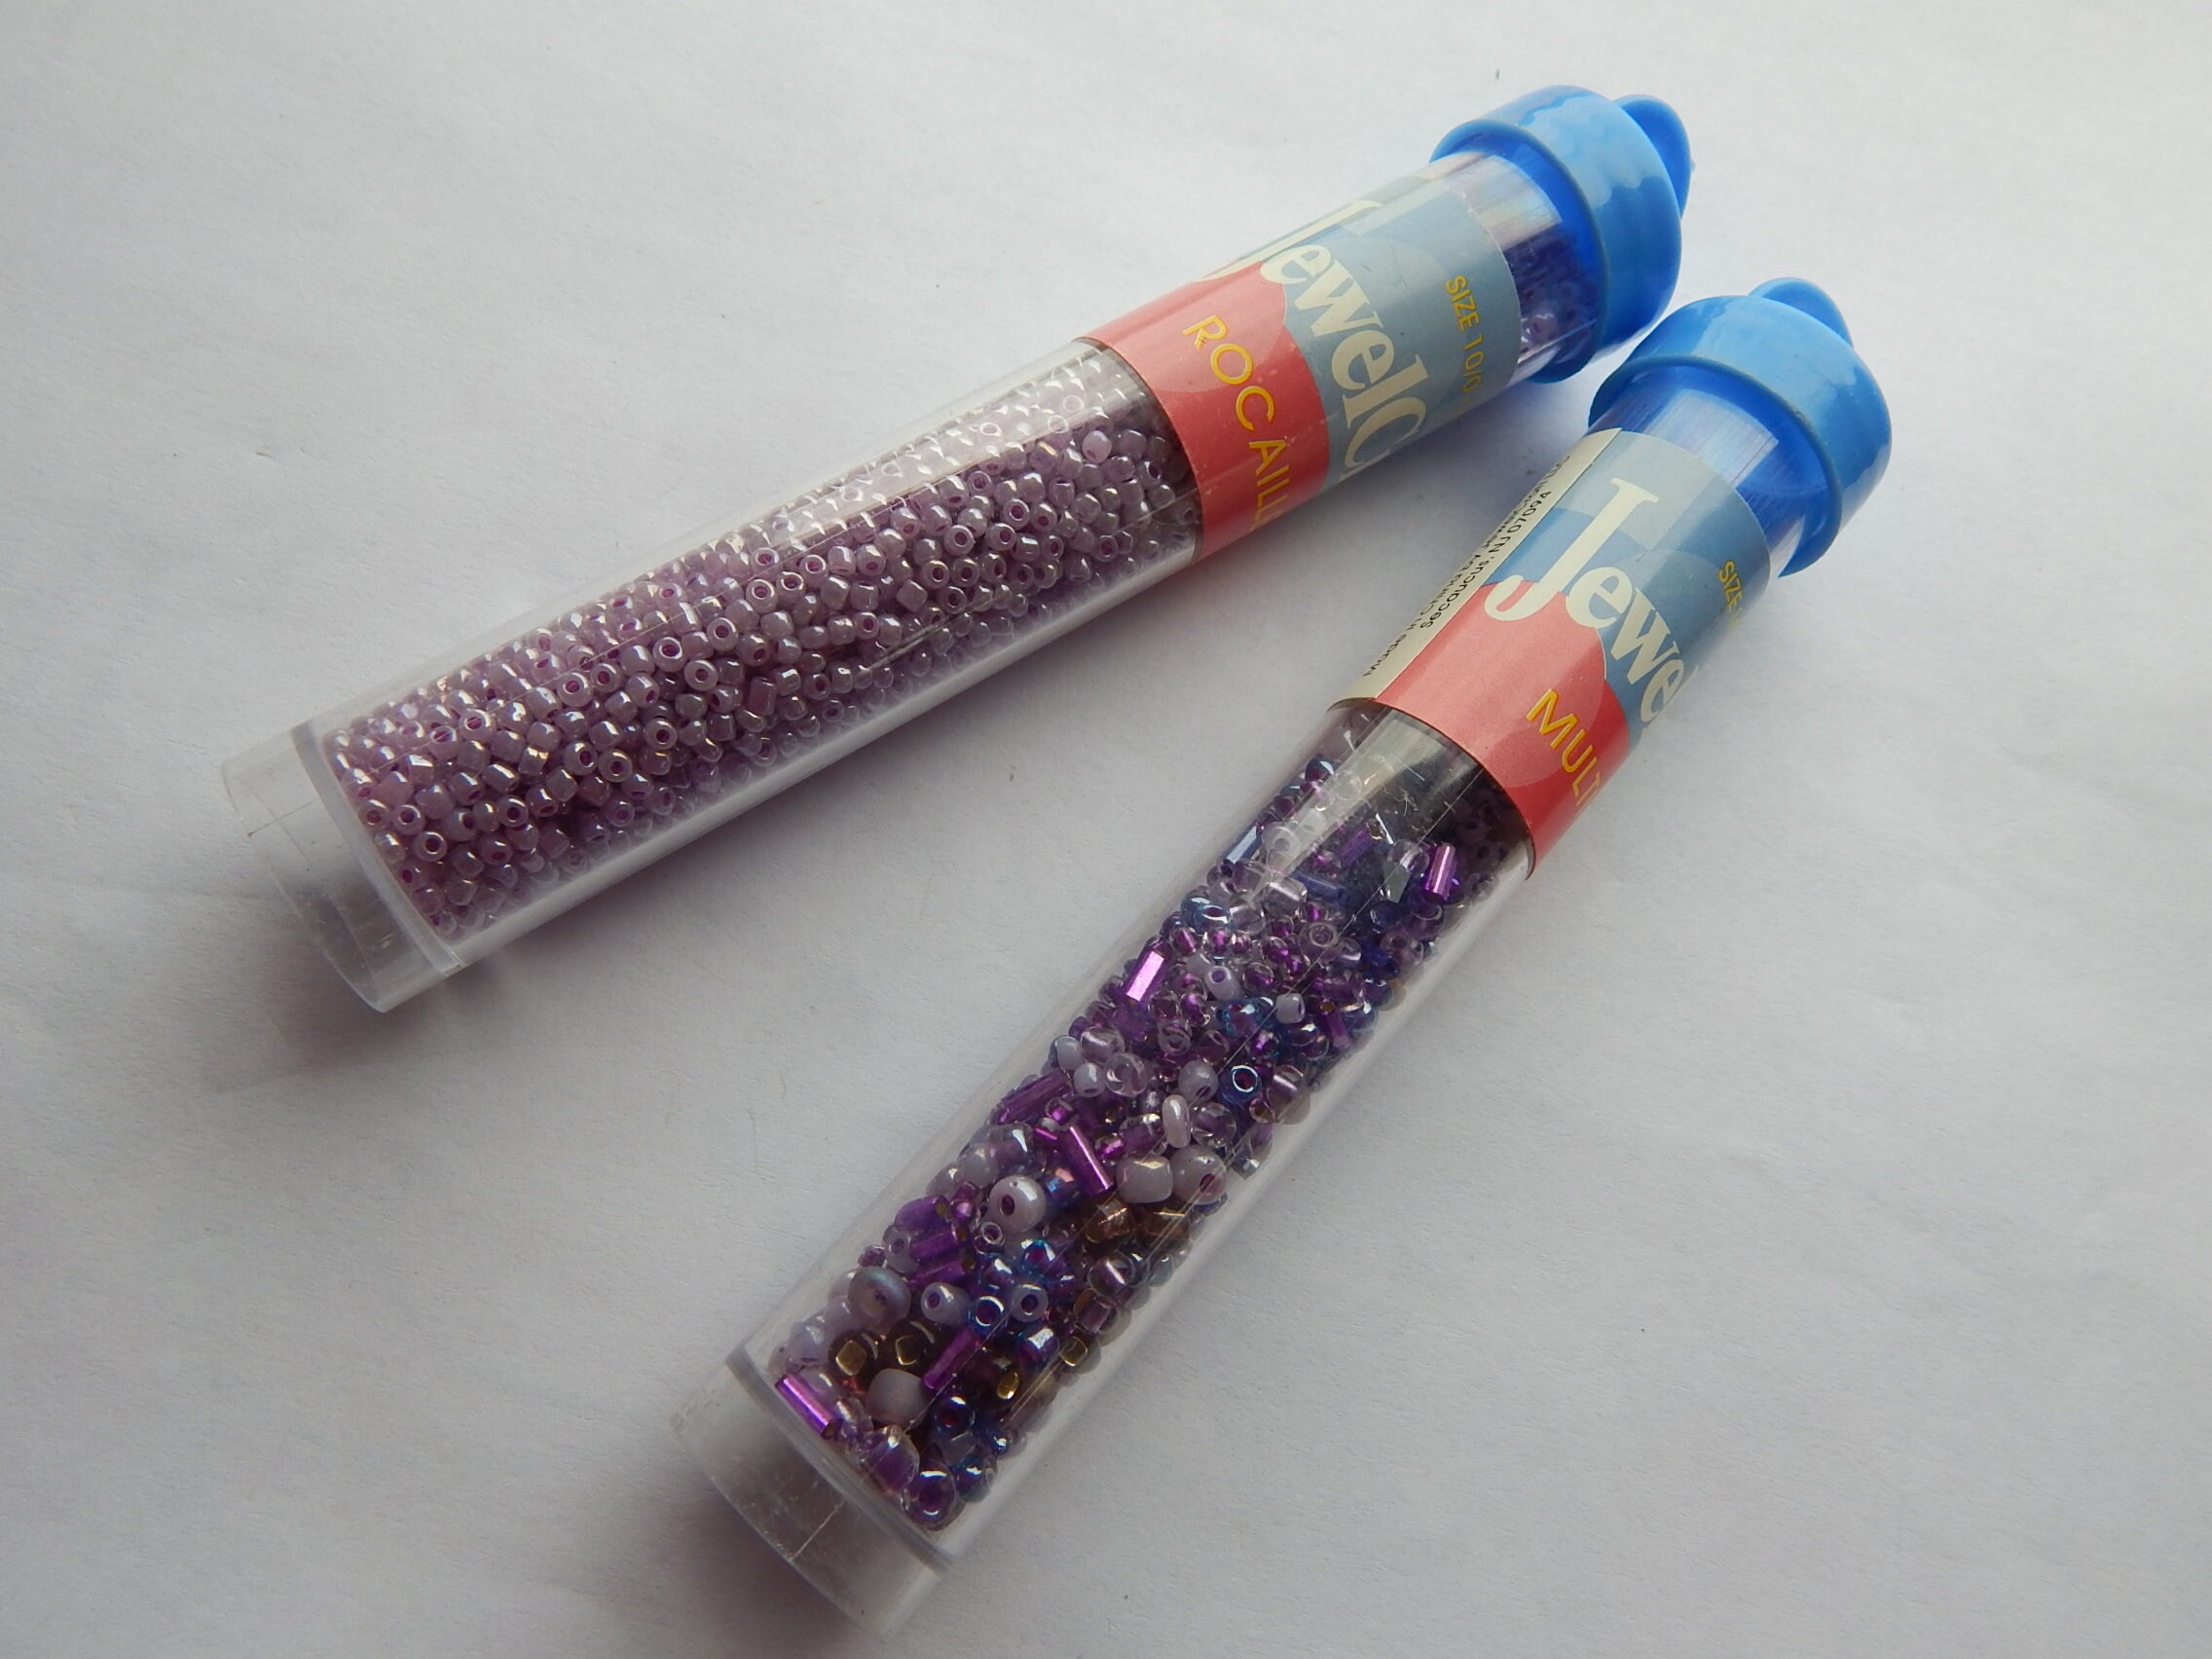 16oz=454g Bulk Assorted Shapes and Sizes 6-12mm Glass Beads Lavender, Infant Unisex, Purple